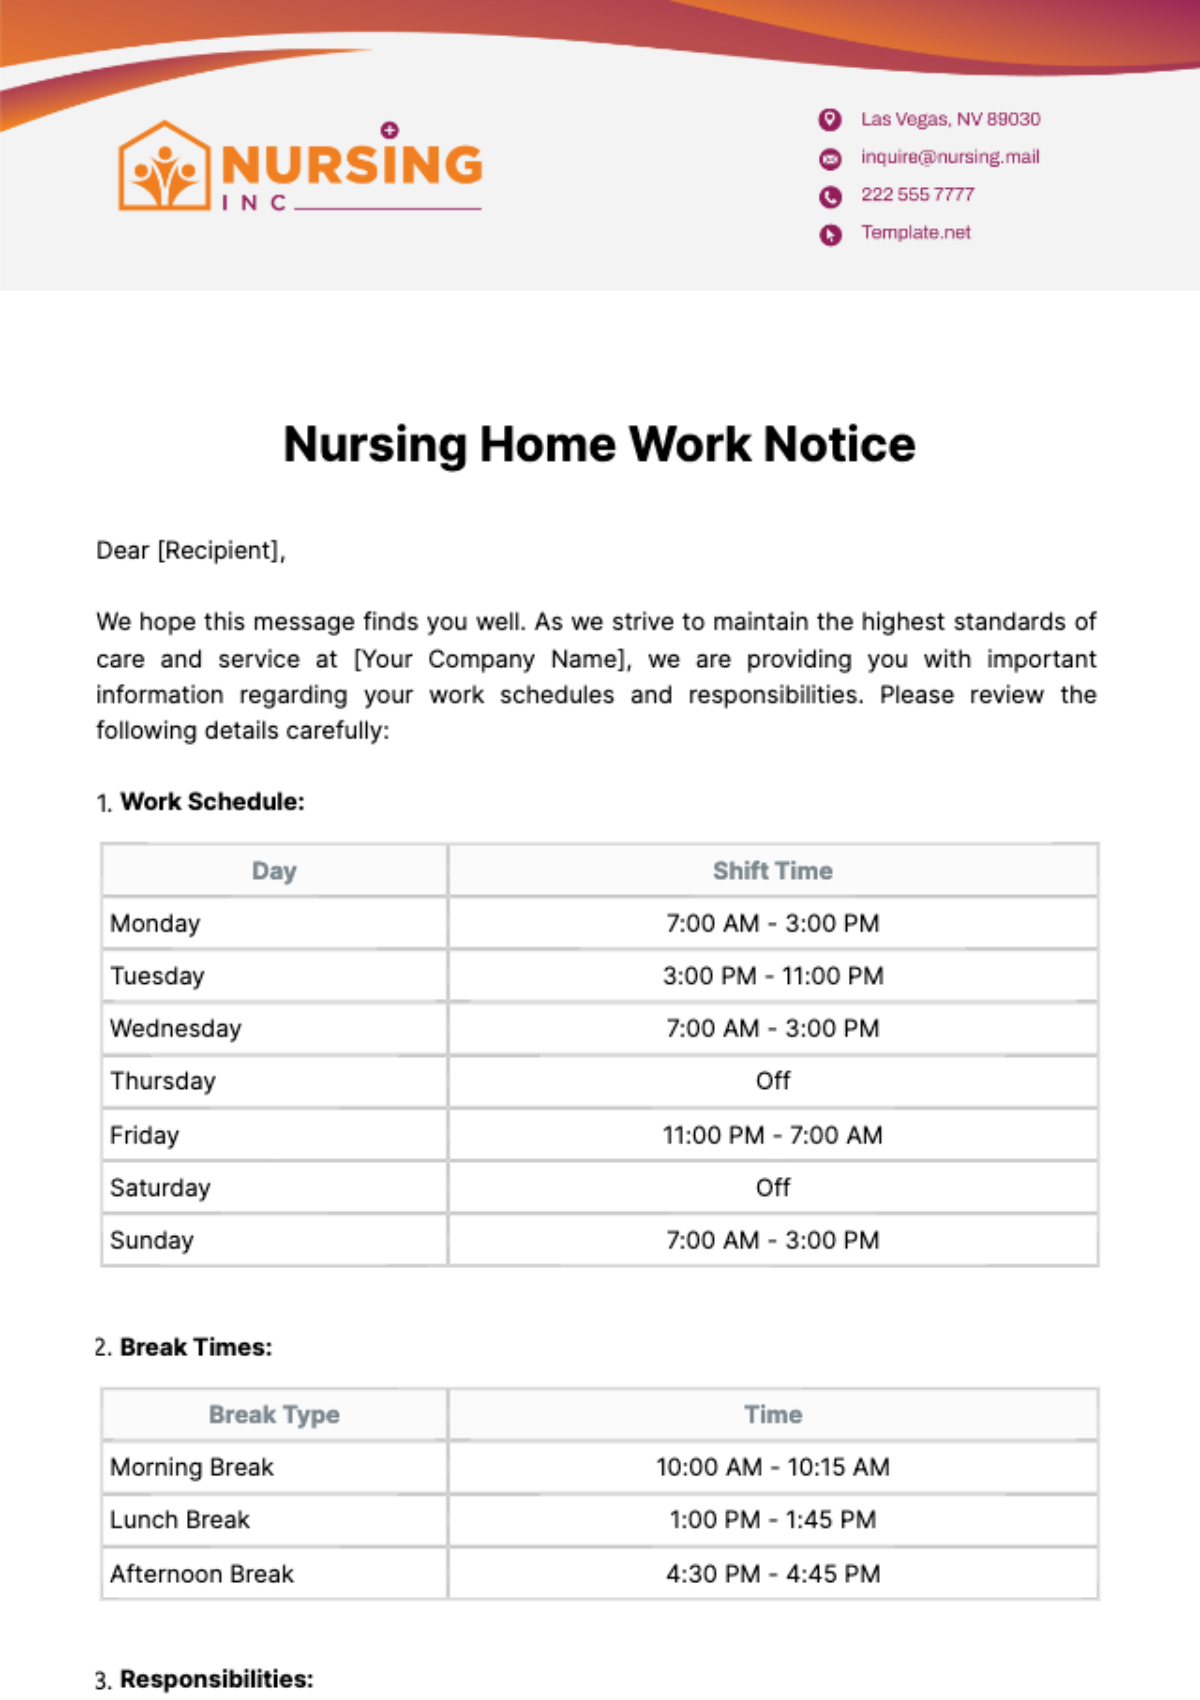 Nursing Home Work Notice Template